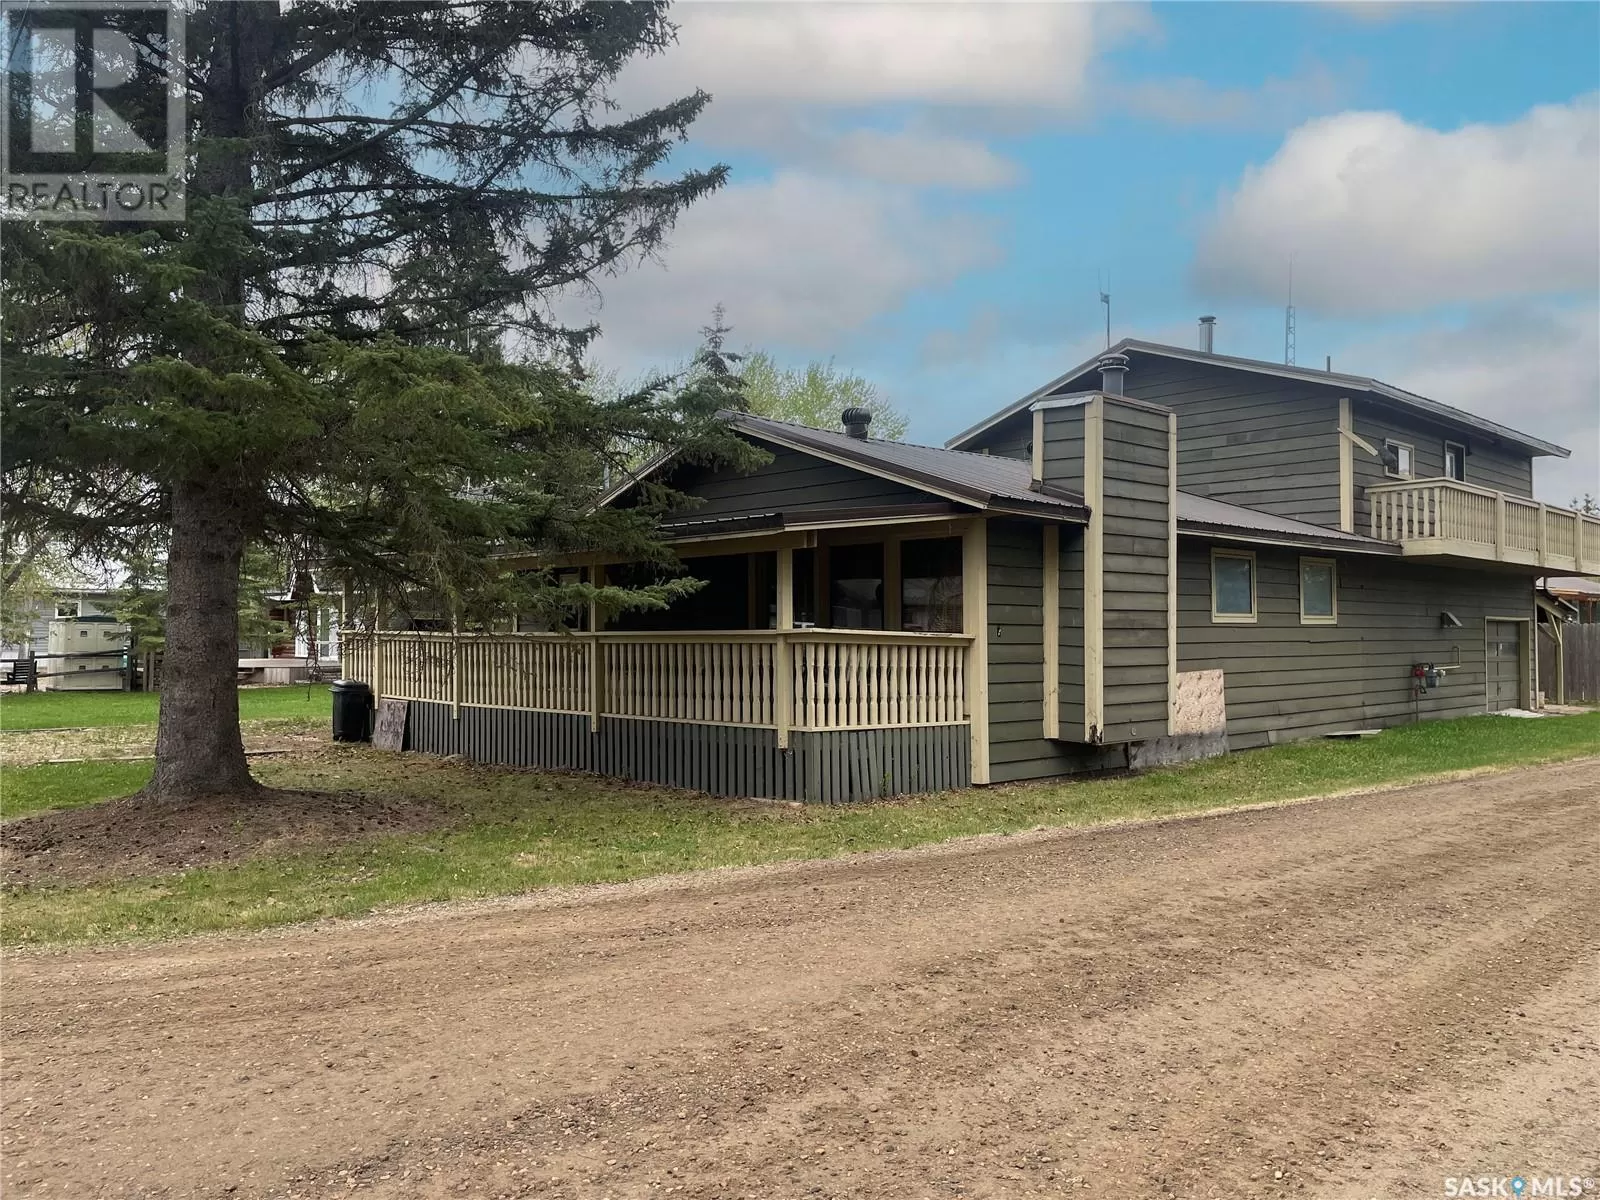 House for rent: 114 Corrical Drive, Turtle Lake, Saskatchewan S0M 2Y0